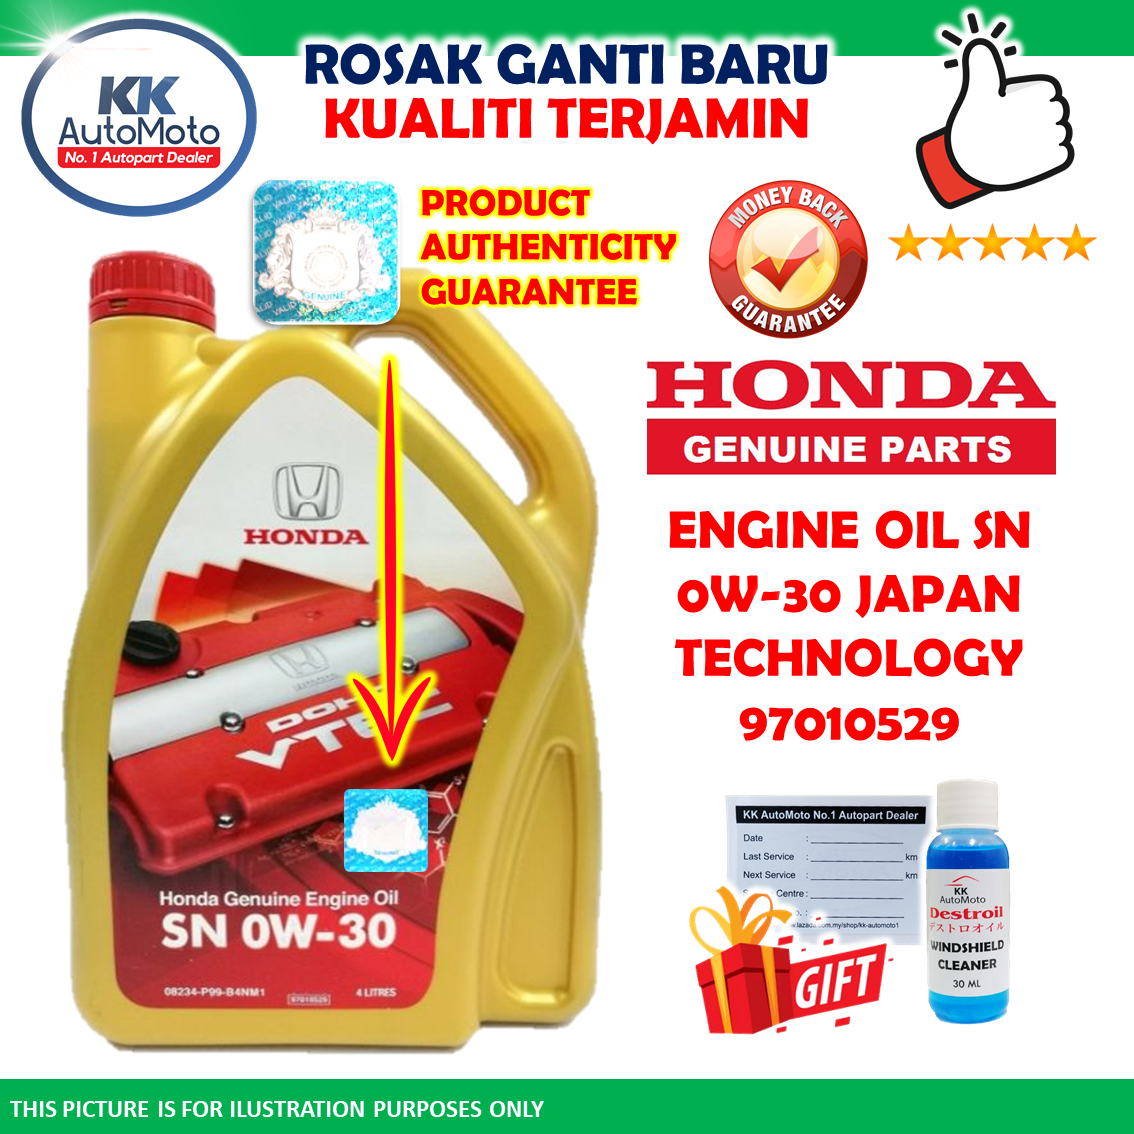 Jamin HONDA Genuine Engine Oil SN 0W-30 0W30 4L Minyak Hitam - Japan Technology 97010529 Gold/Red